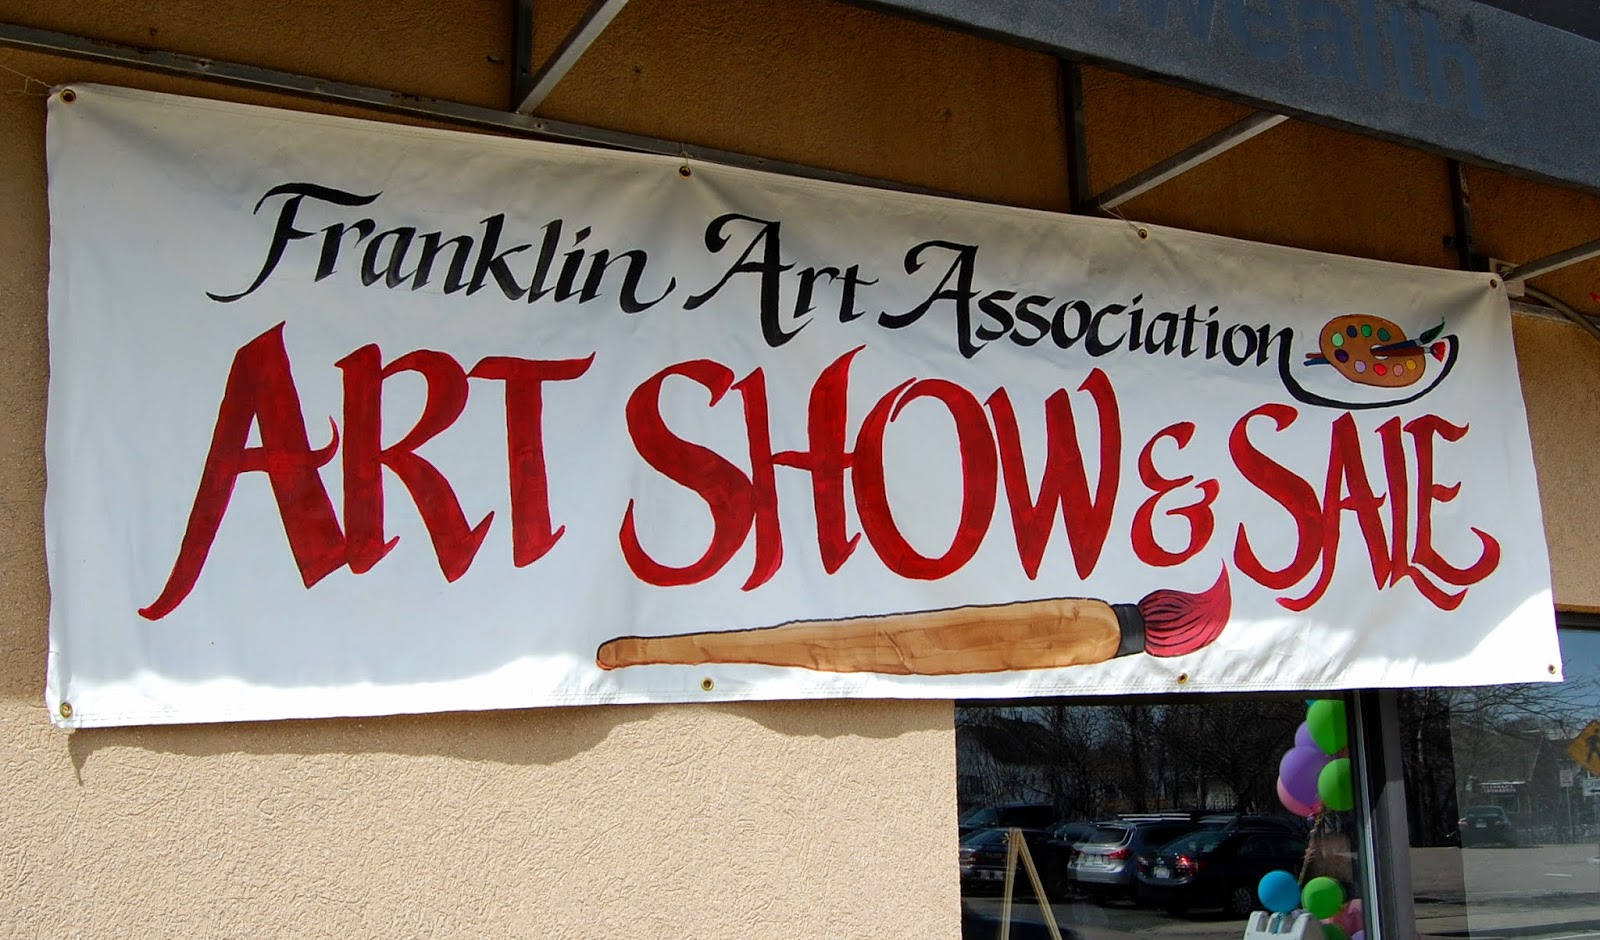 Franklin Art Association - Art Show and Sale